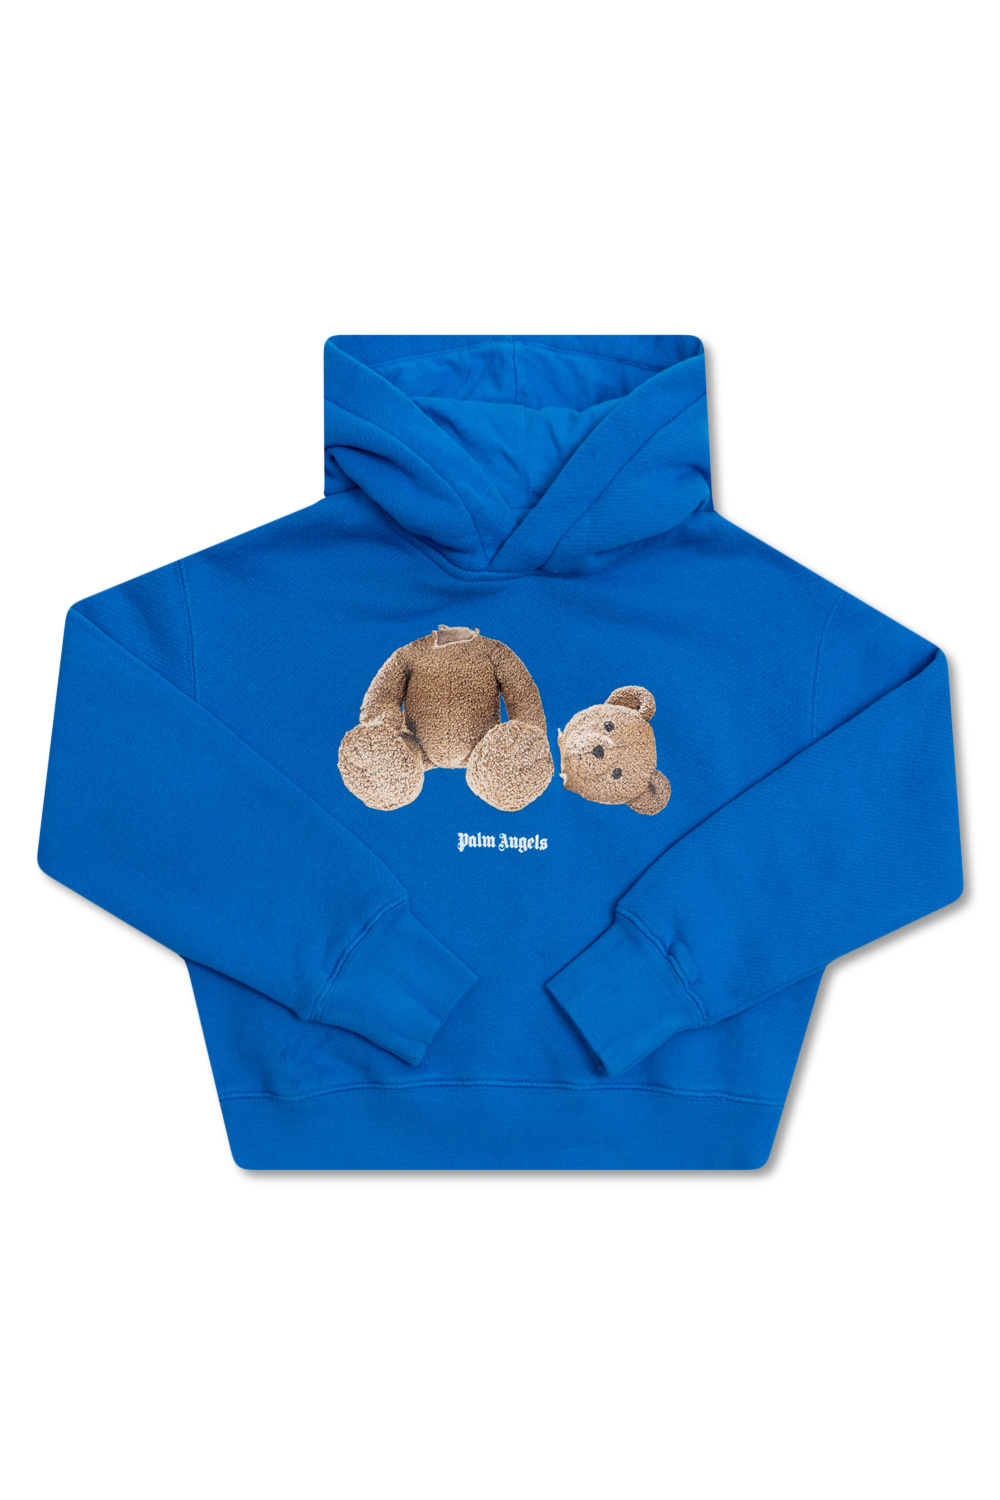 Zeroweight Pro Warm Reflect Jacket hoodie Hilfiger with logo